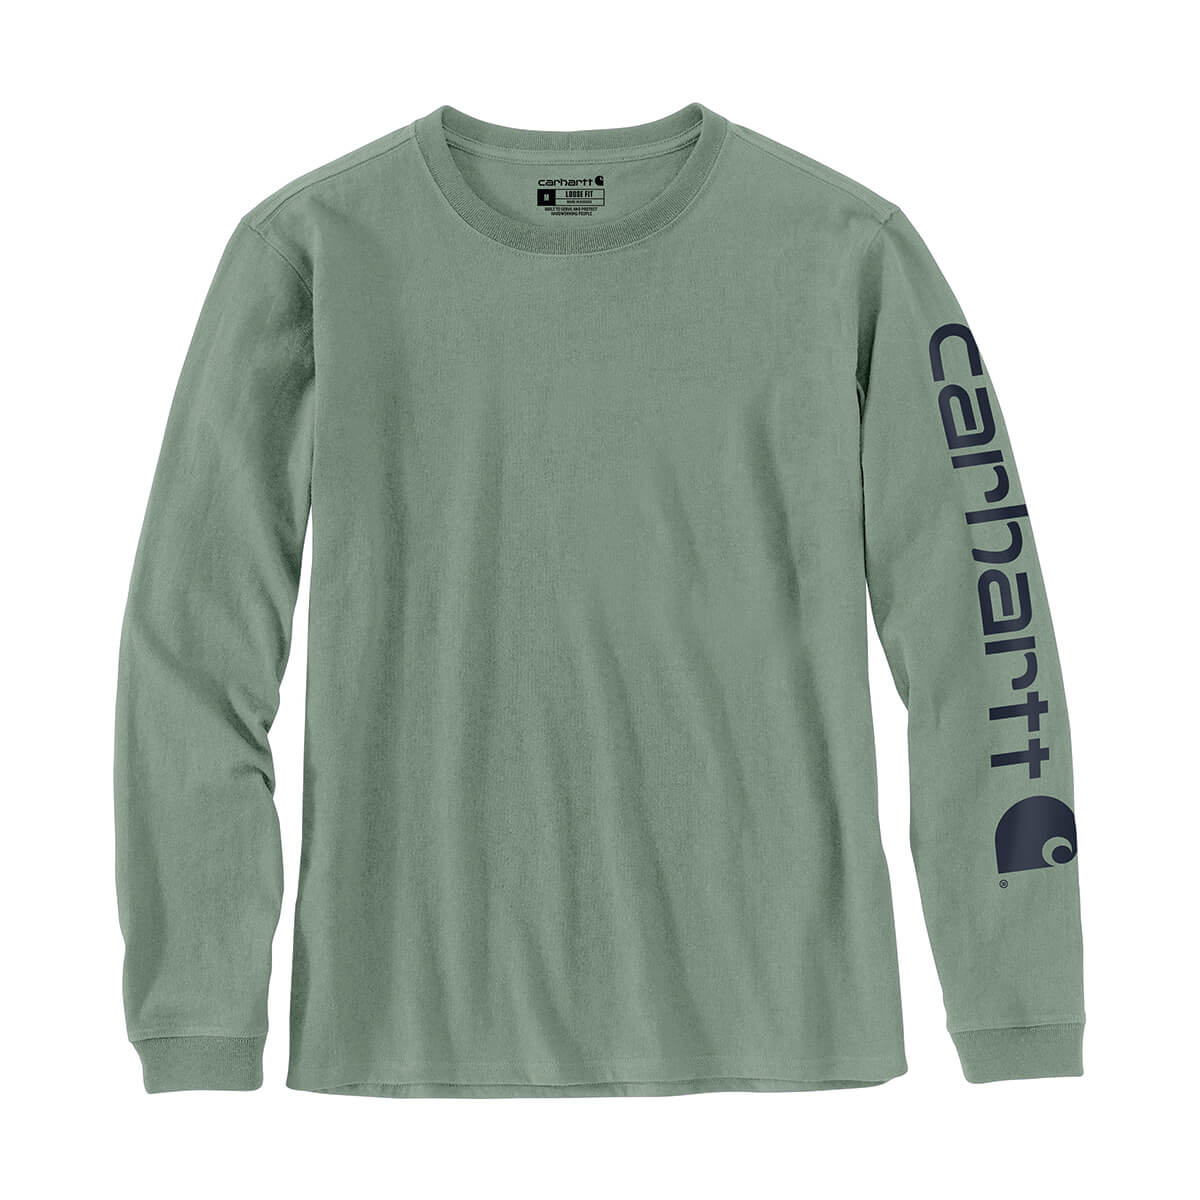 Carhartt Loose Fit Heavyweight Long-Sleeve Graphic T-Shirt - Jade